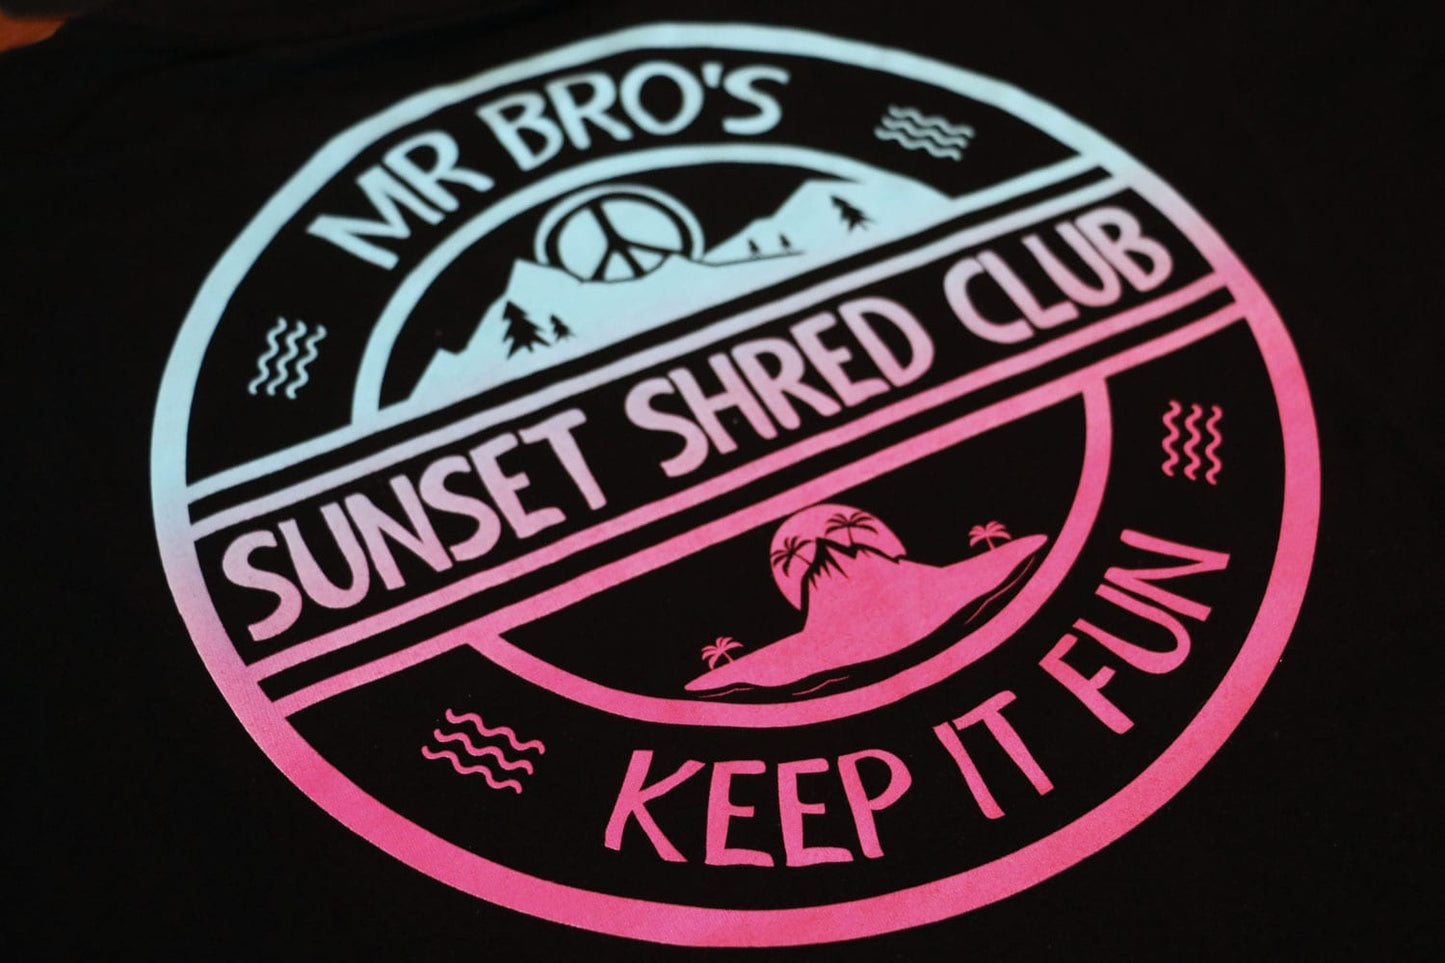 Sunset Shred Club Tee (Retro Fade)